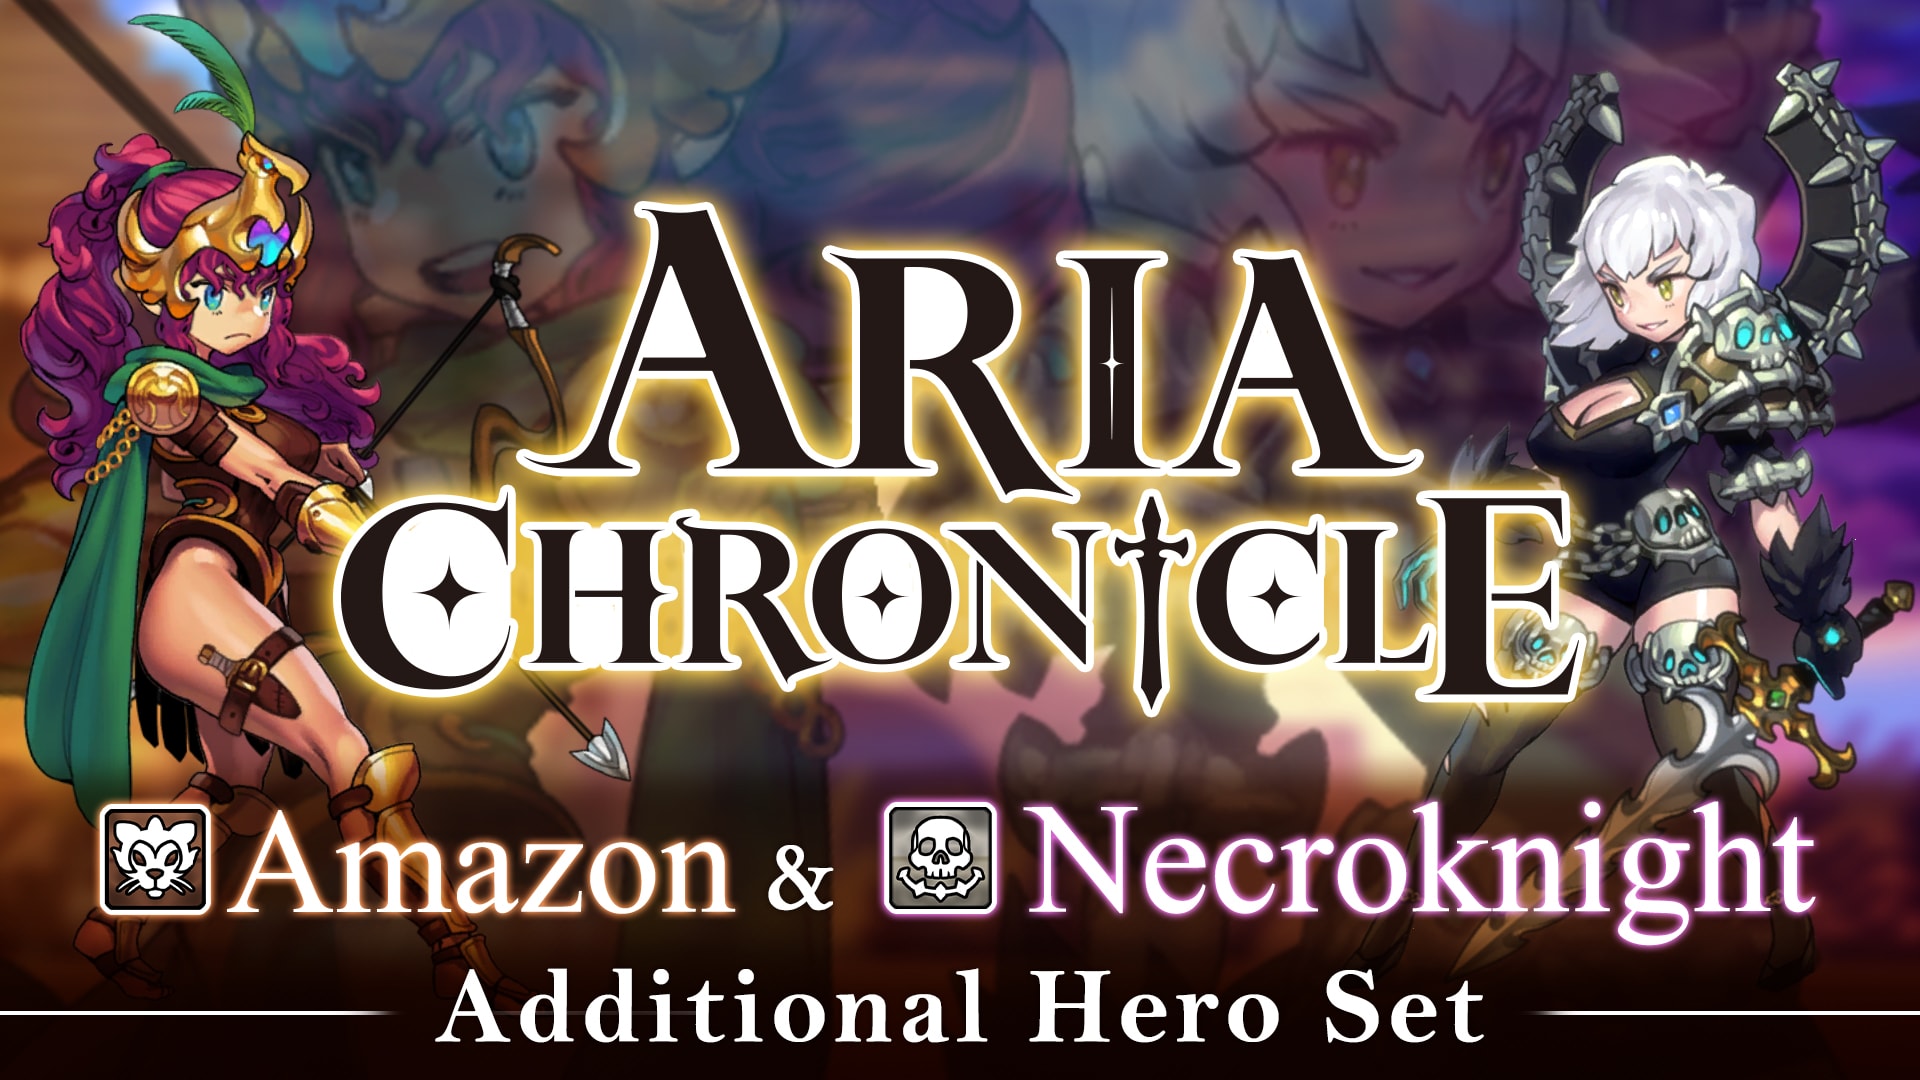 Additional Hero Set - Amazon & Necroknight